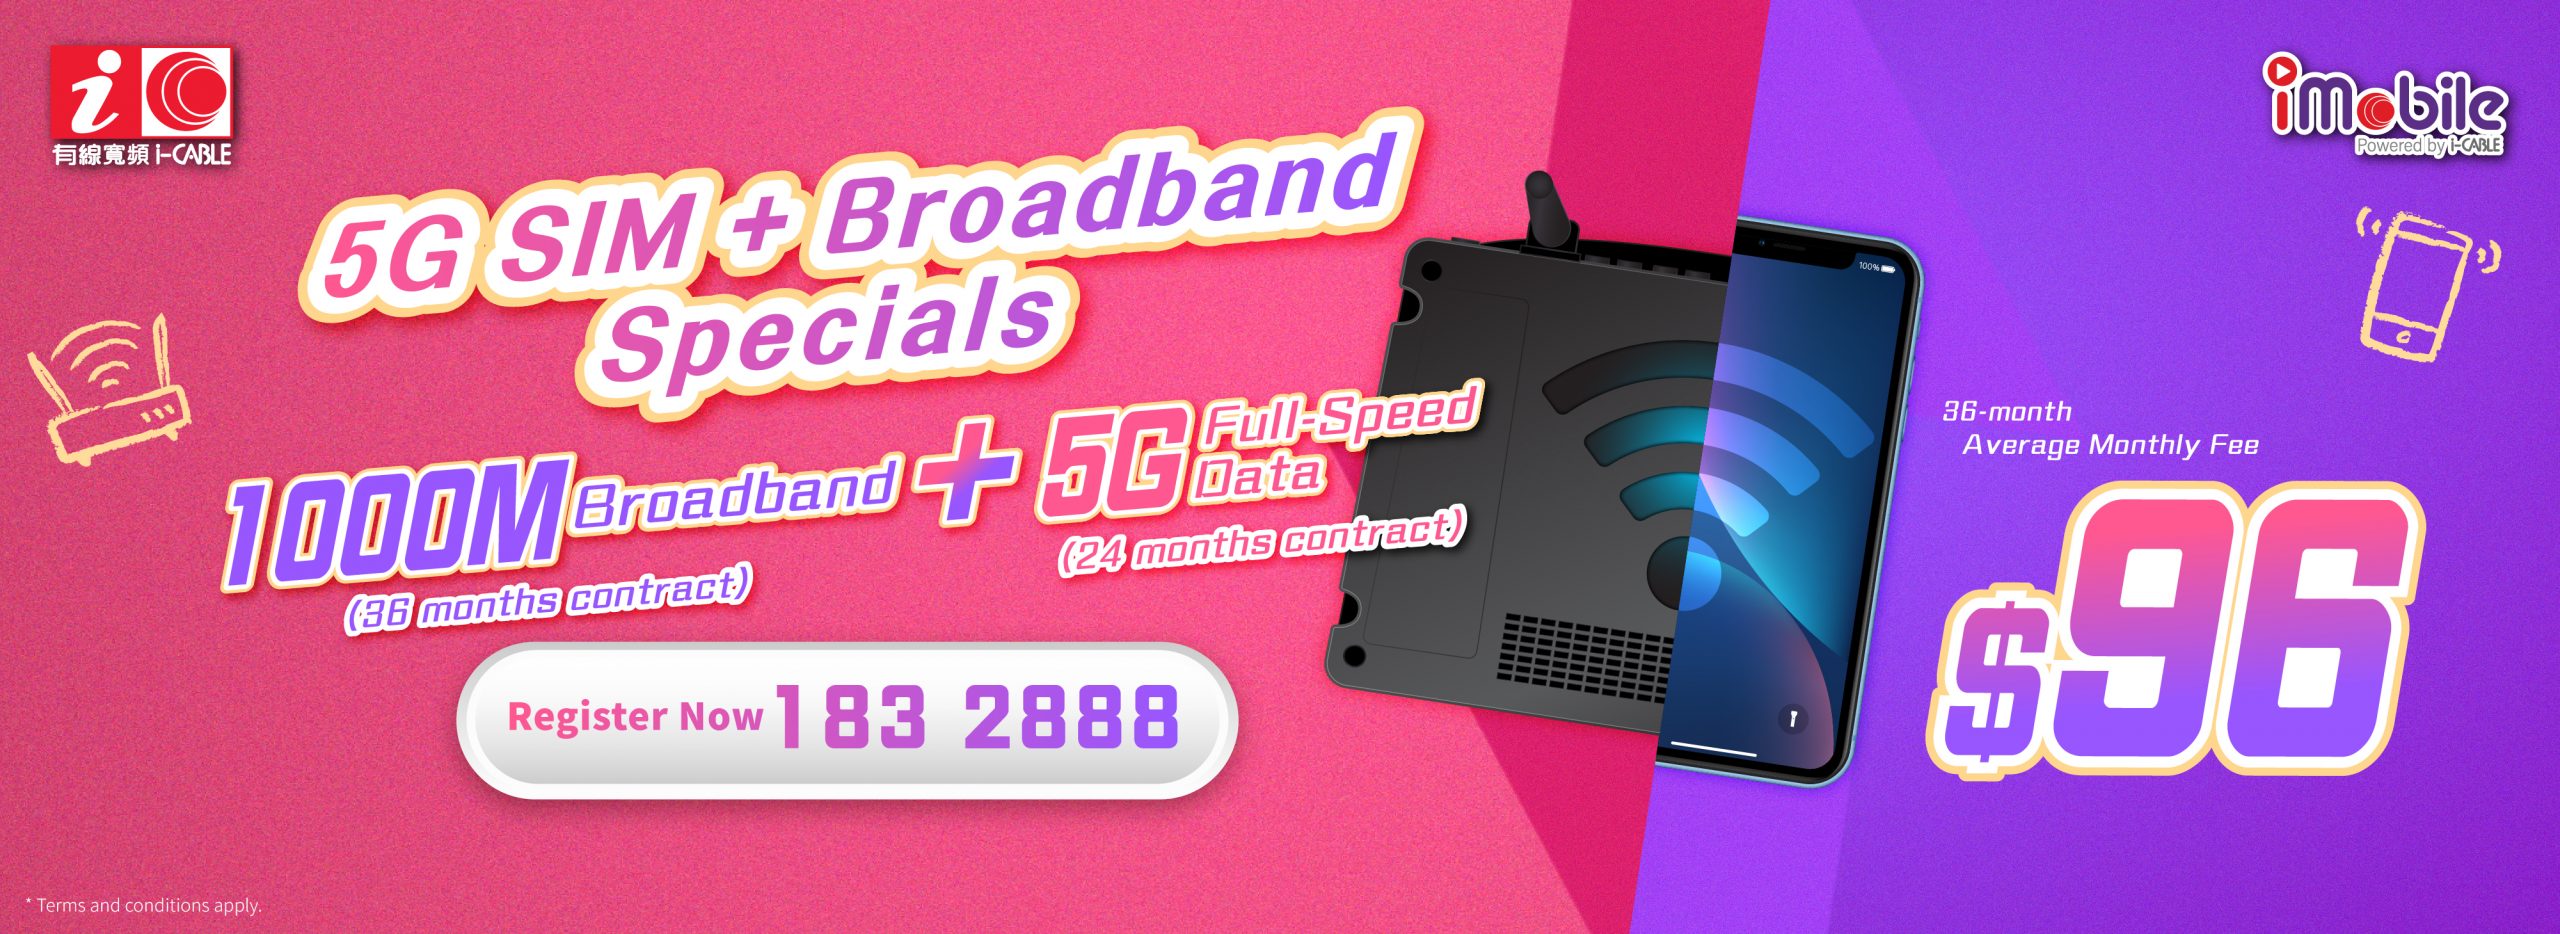 230616_imob_broadband+5G_banner_homepage_desktop_C